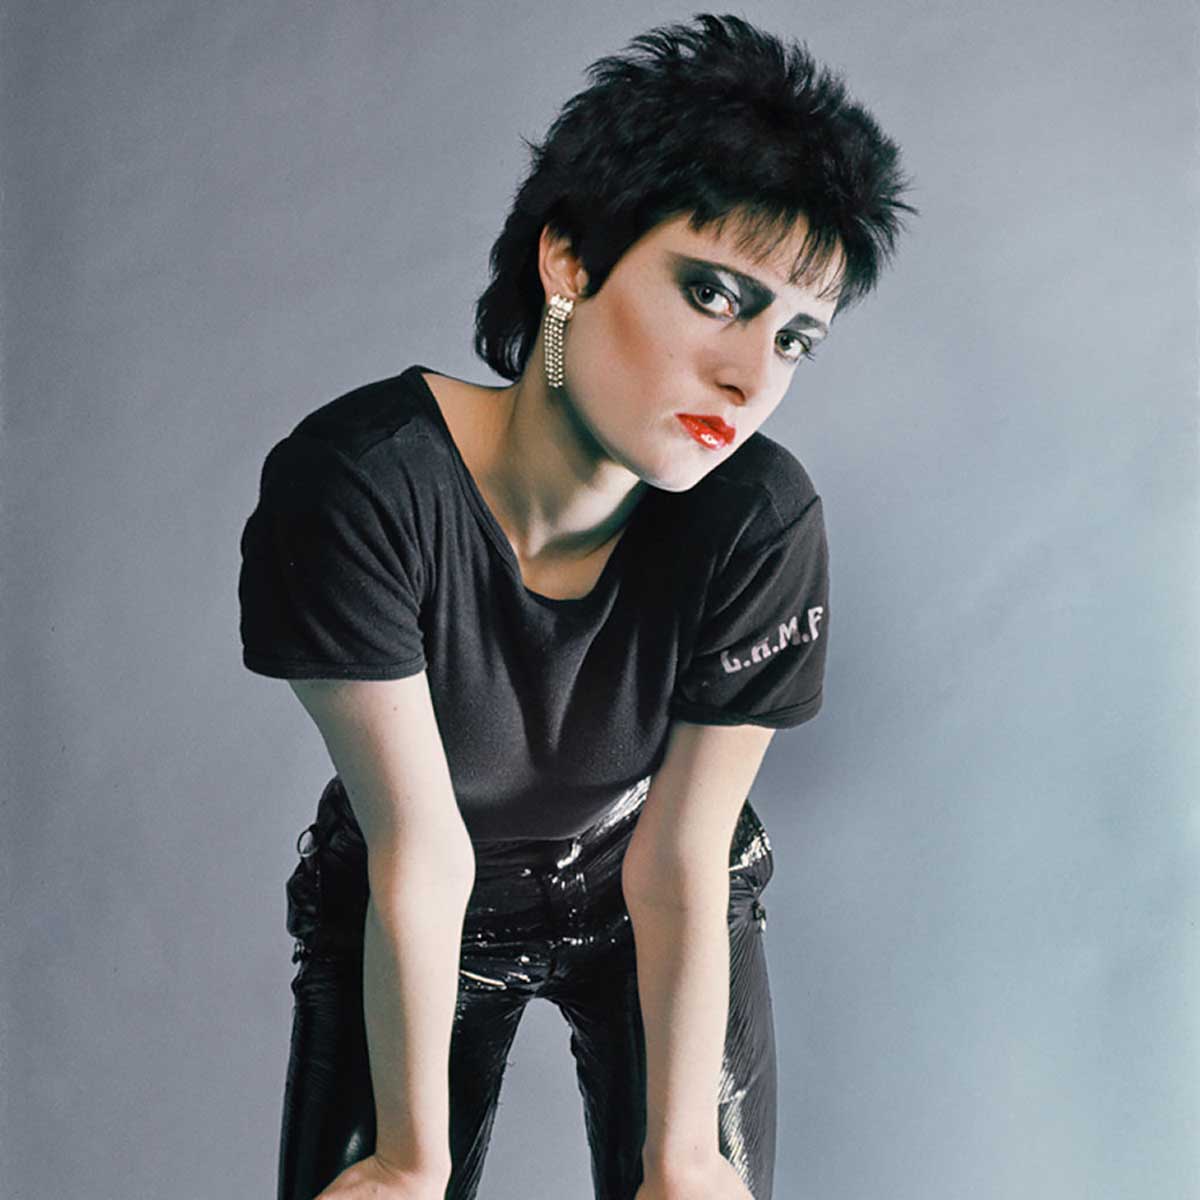 Siouxsie by Steve Emberton